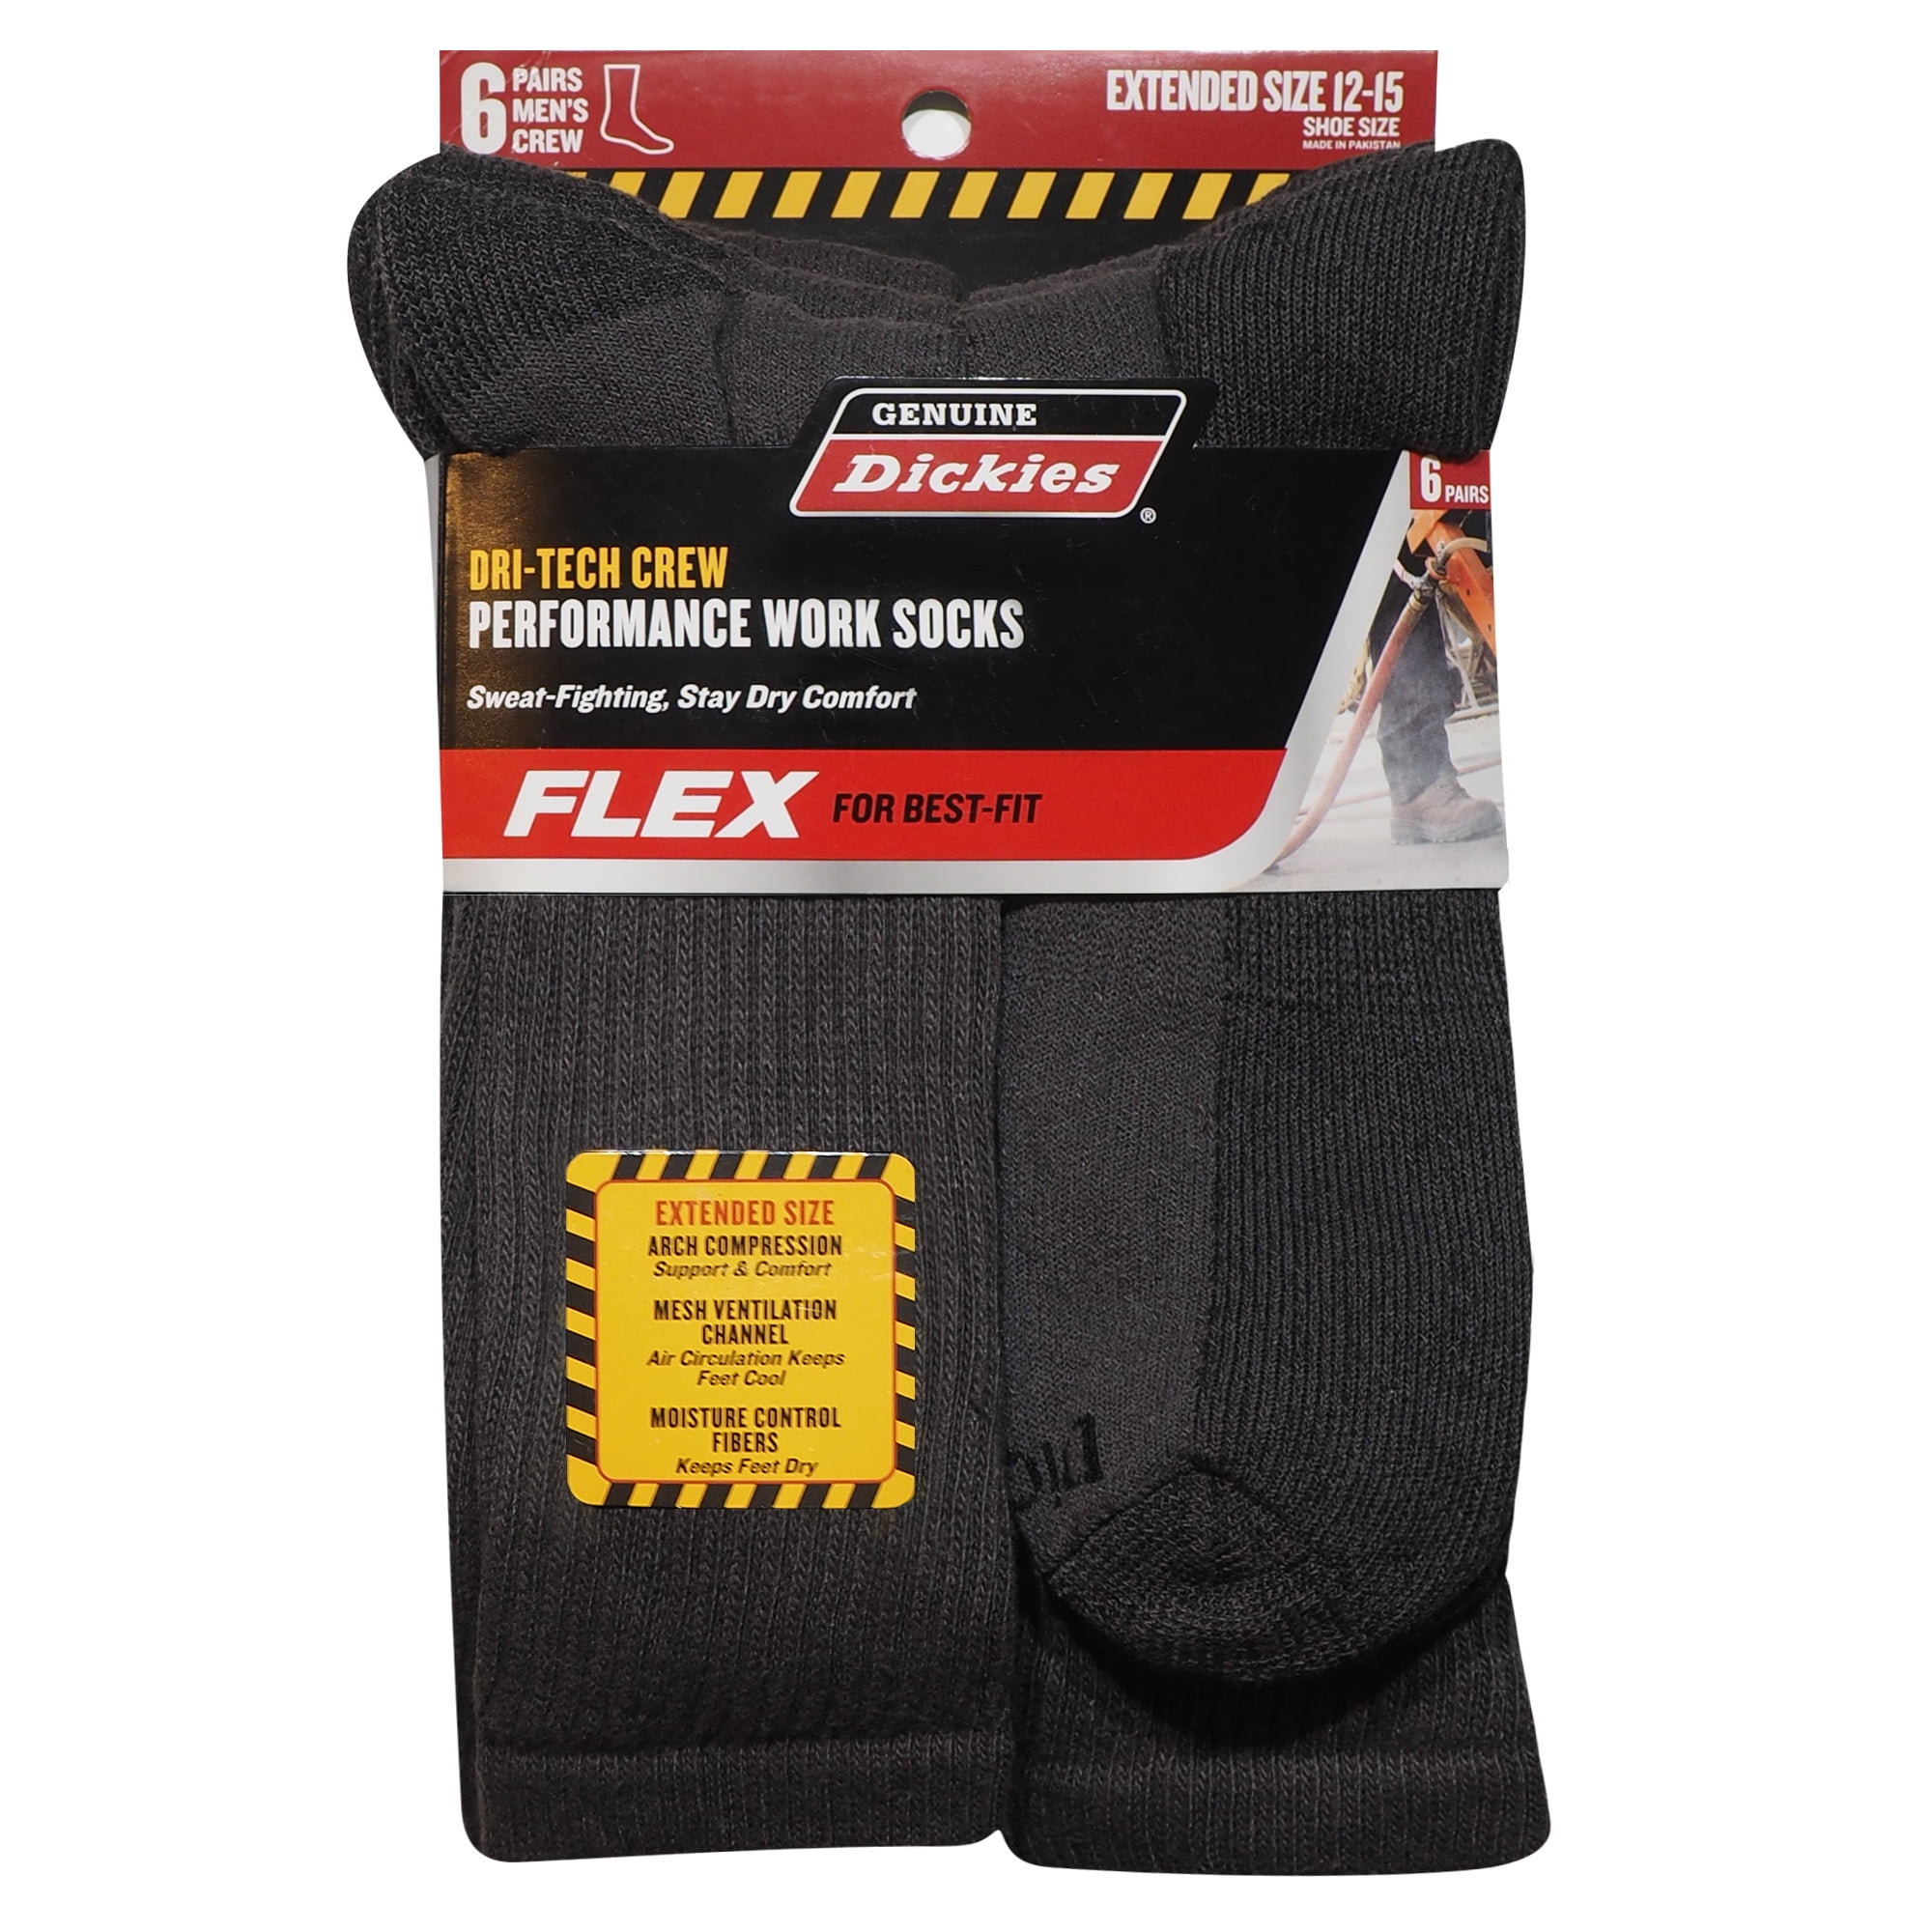 Dickies Dri-Tech Crew Socks, 6-Pack - Walmart.com